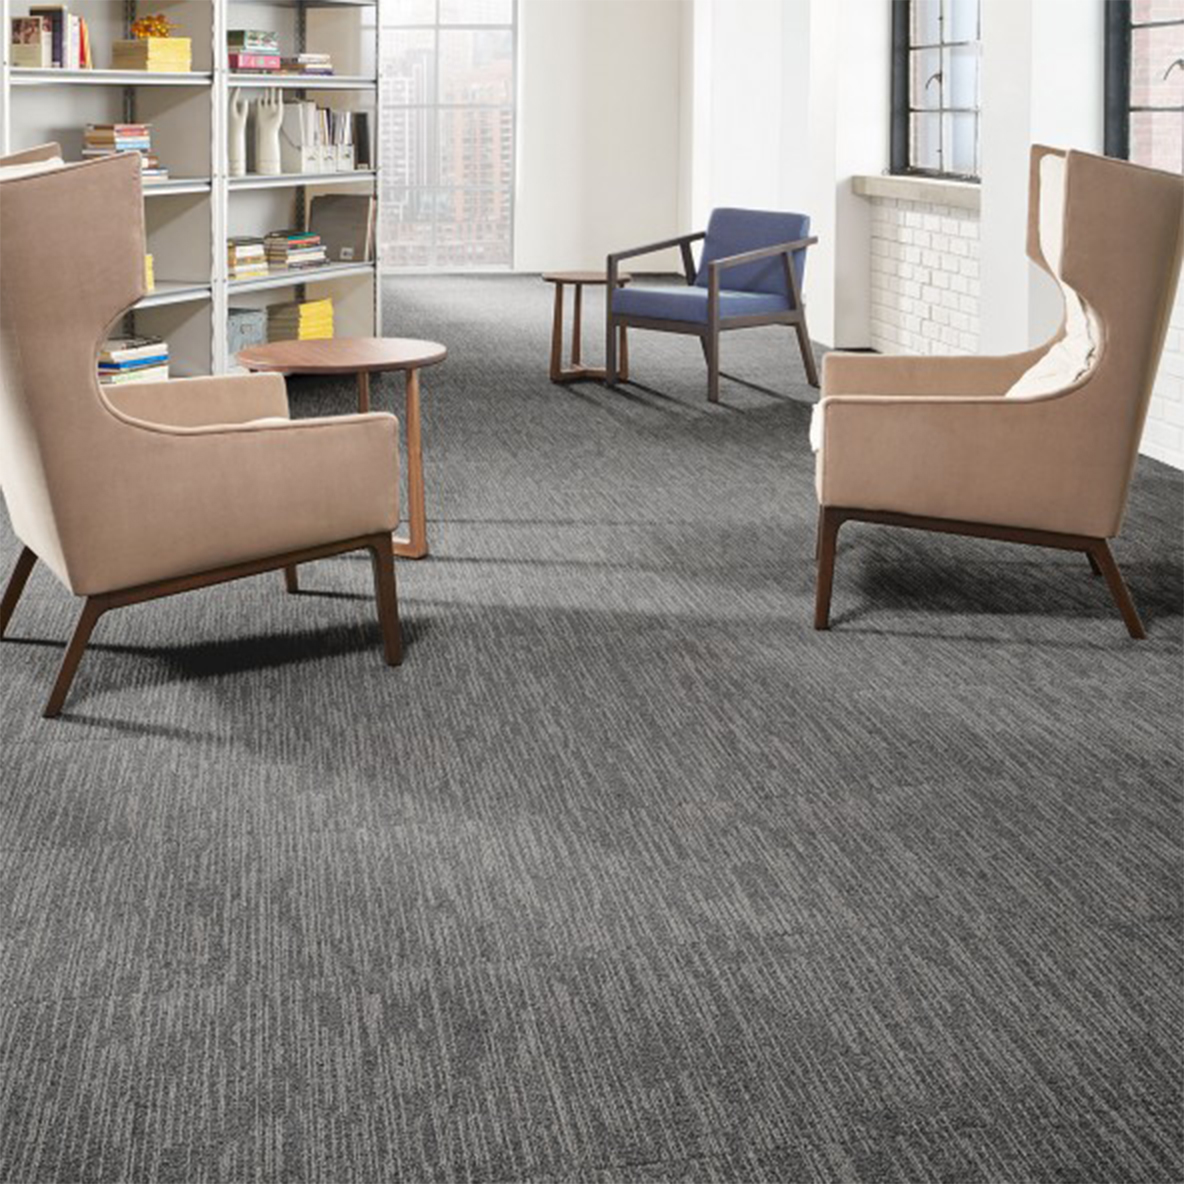 Overdirve Commercial Carpet Tile .30 Inch x 50x50 cm per Tile Leaden in Waiting Room